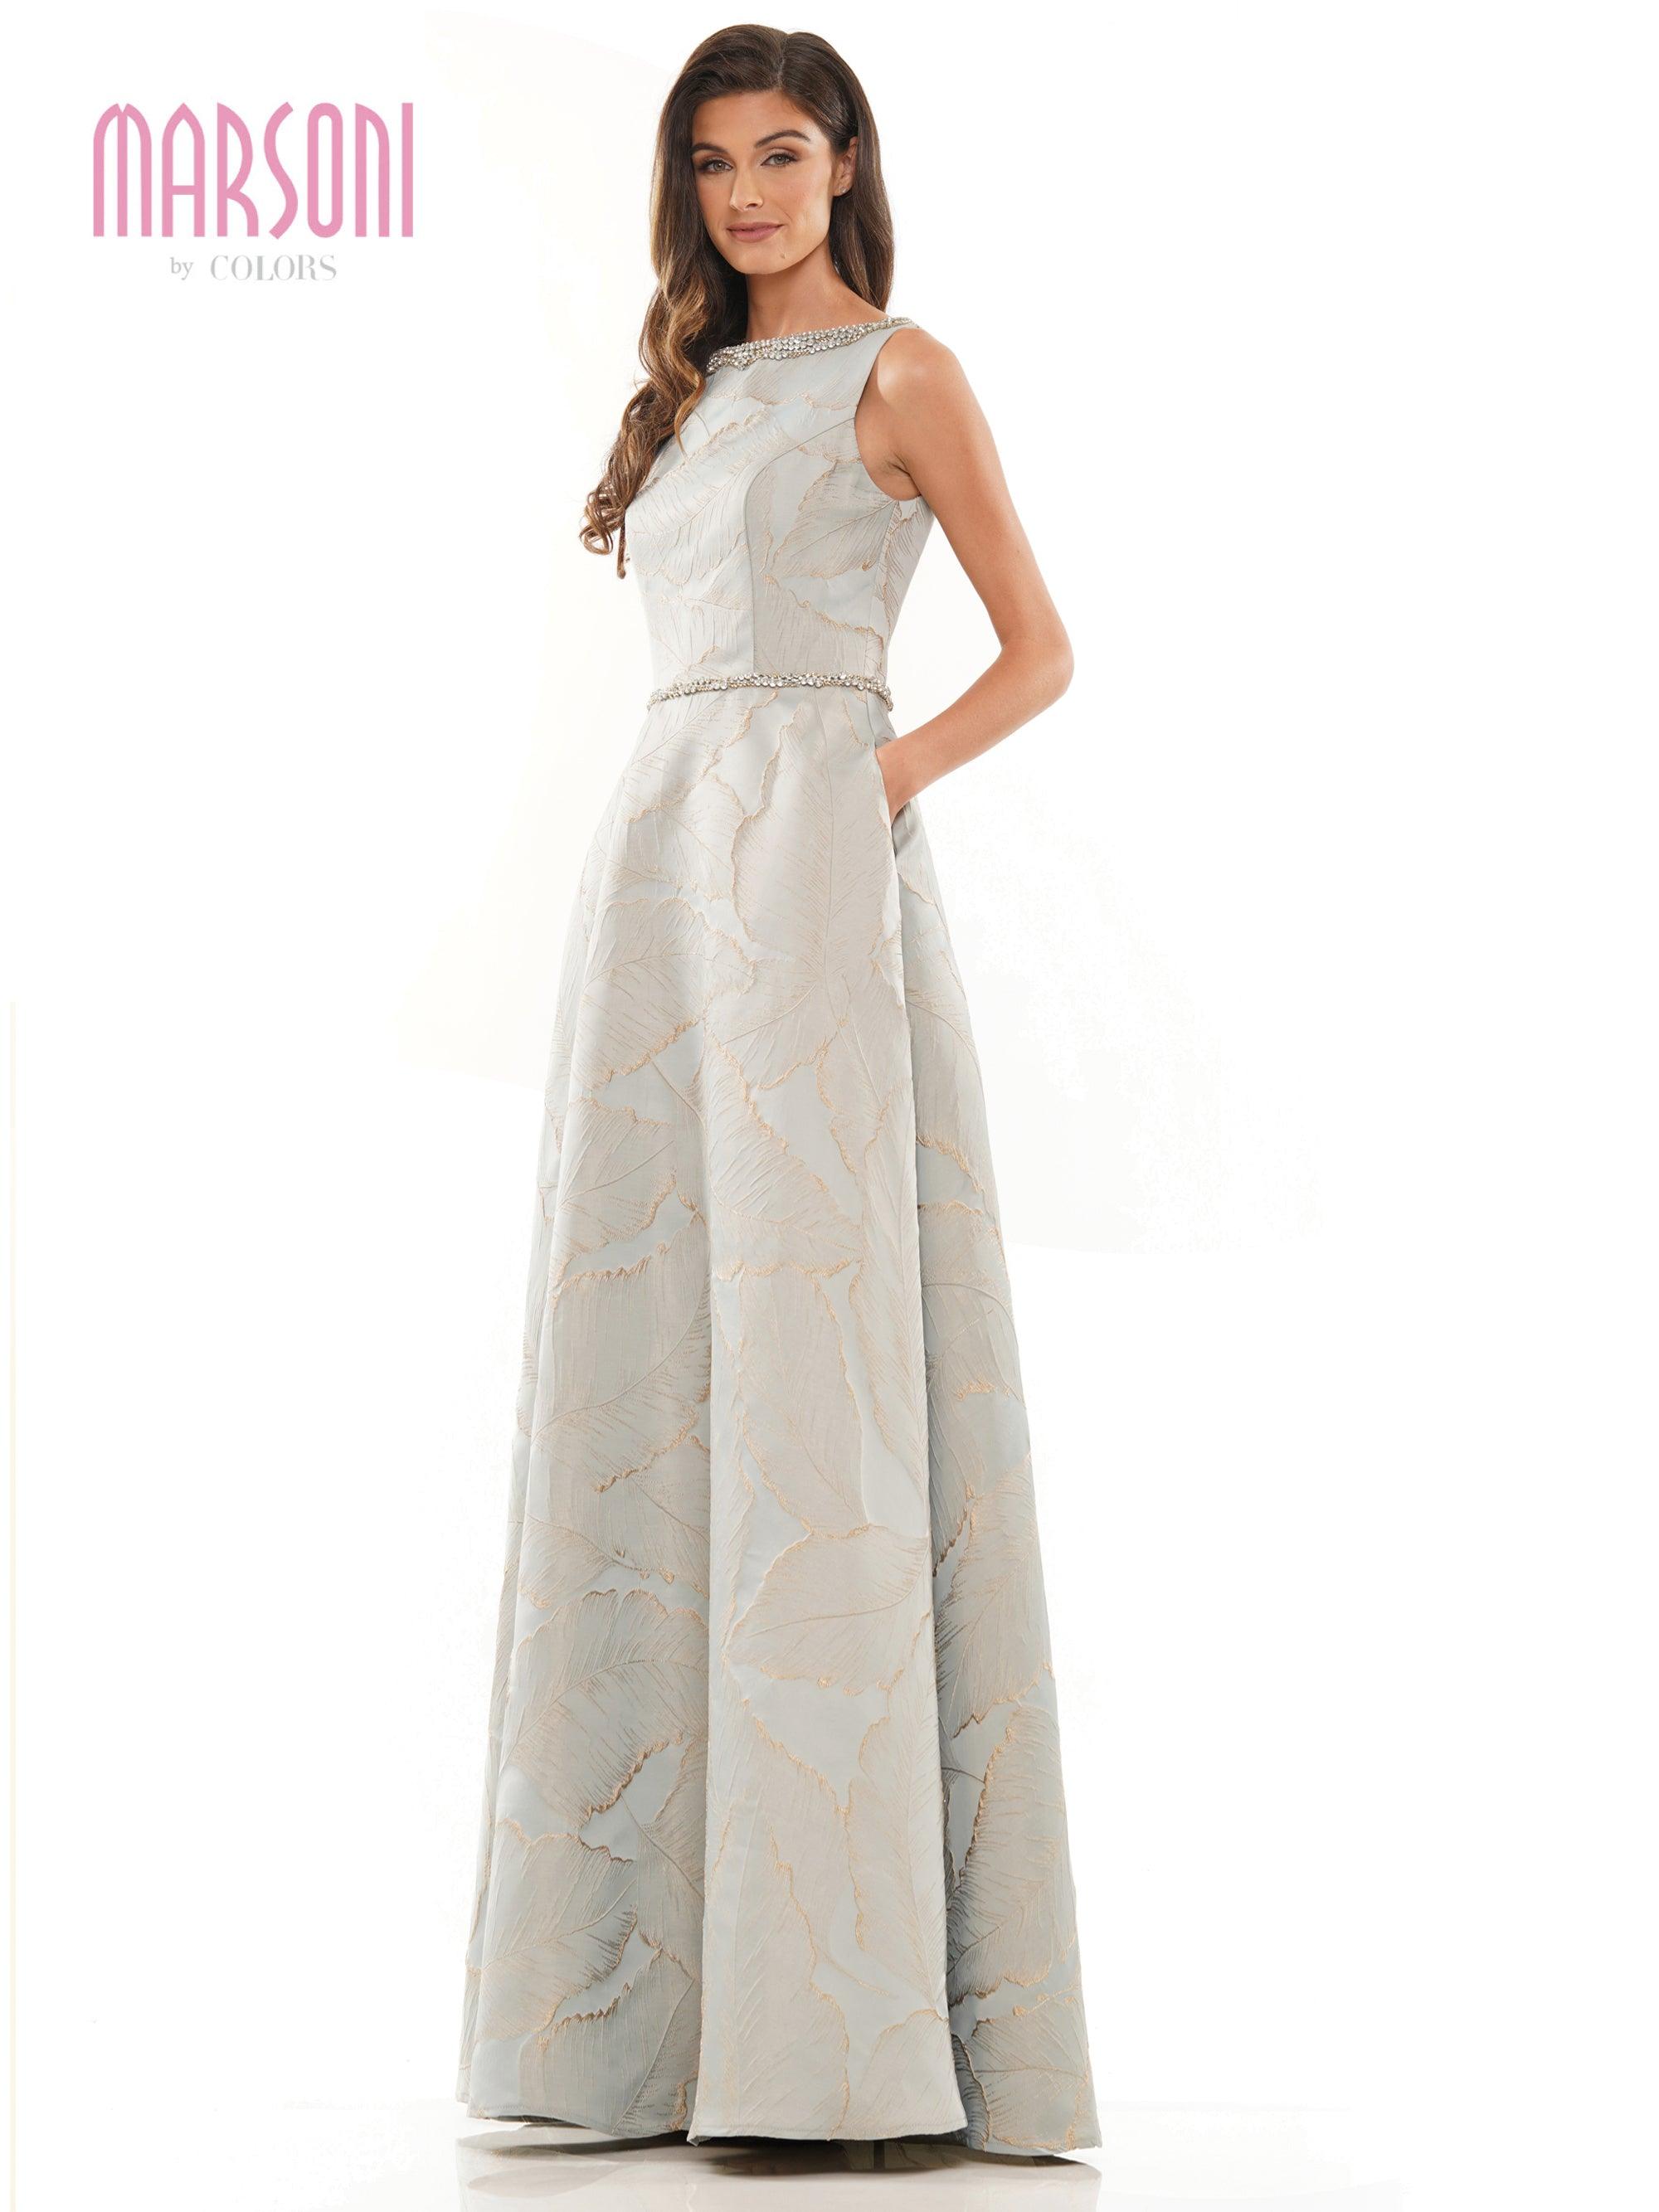 Marsoni Long Sleeveless Formal Dress 1224 - The Dress Outlet